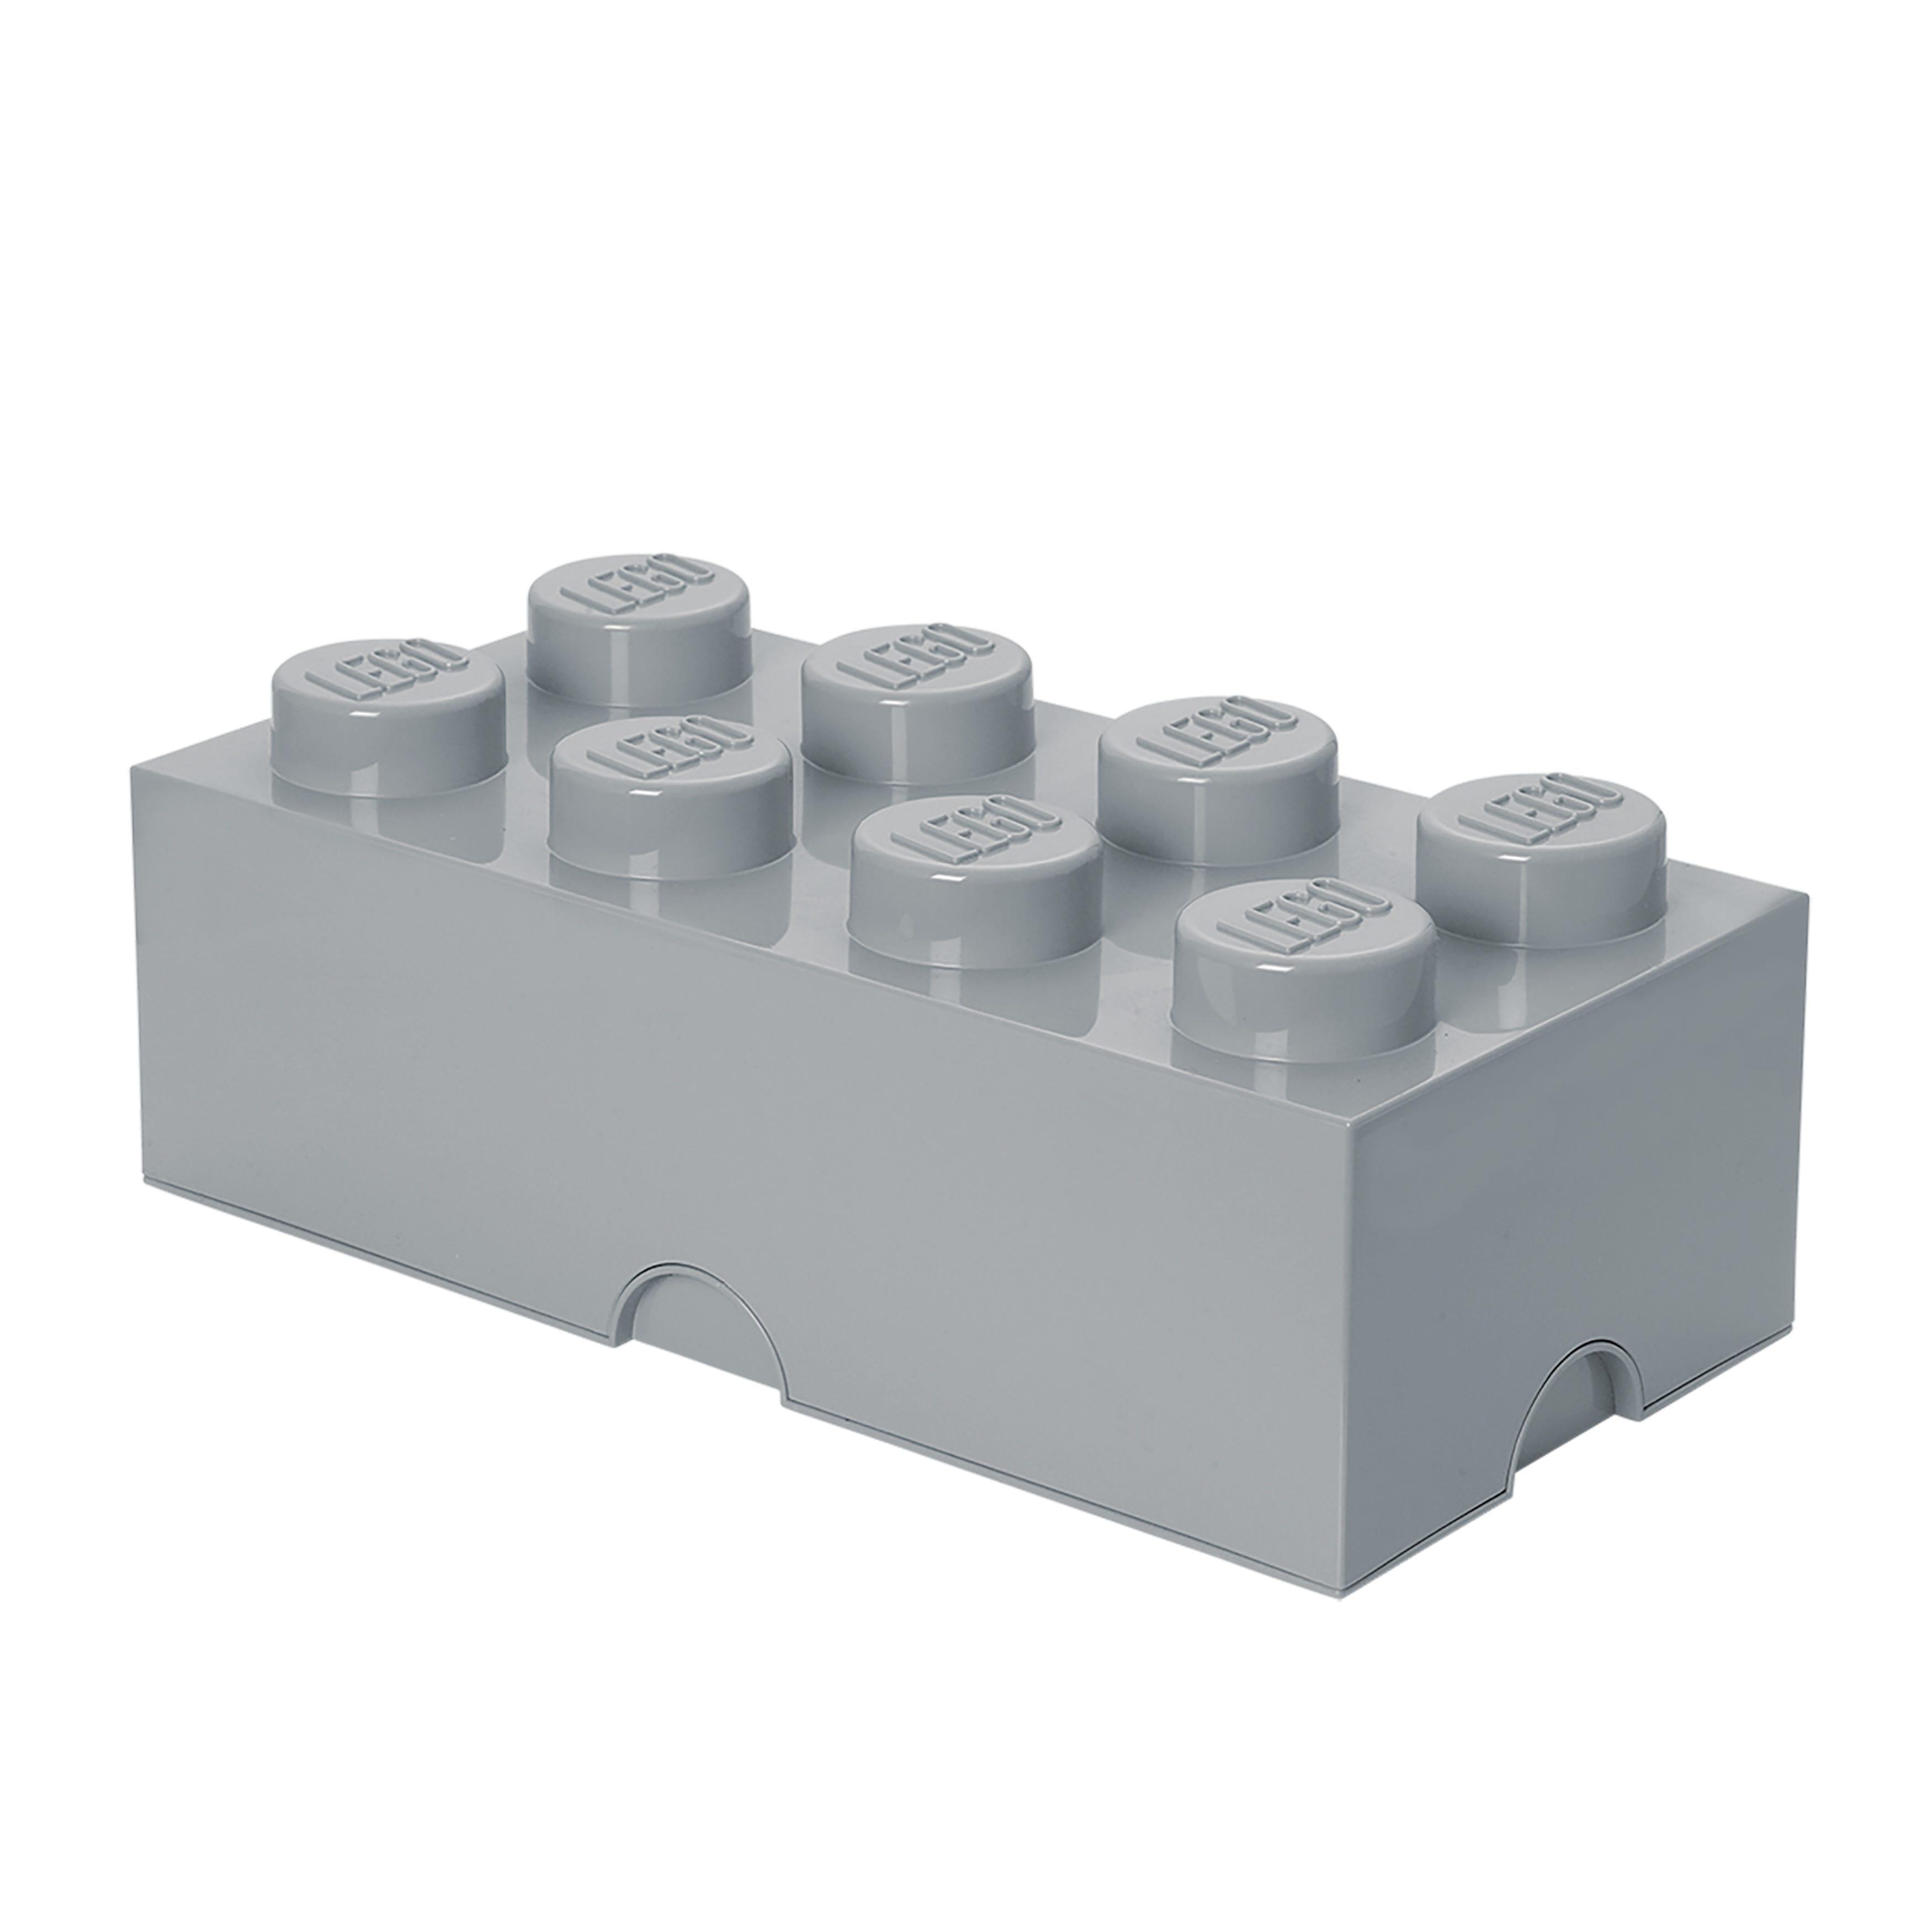 8-Stud Storage Brick - Stone Gray